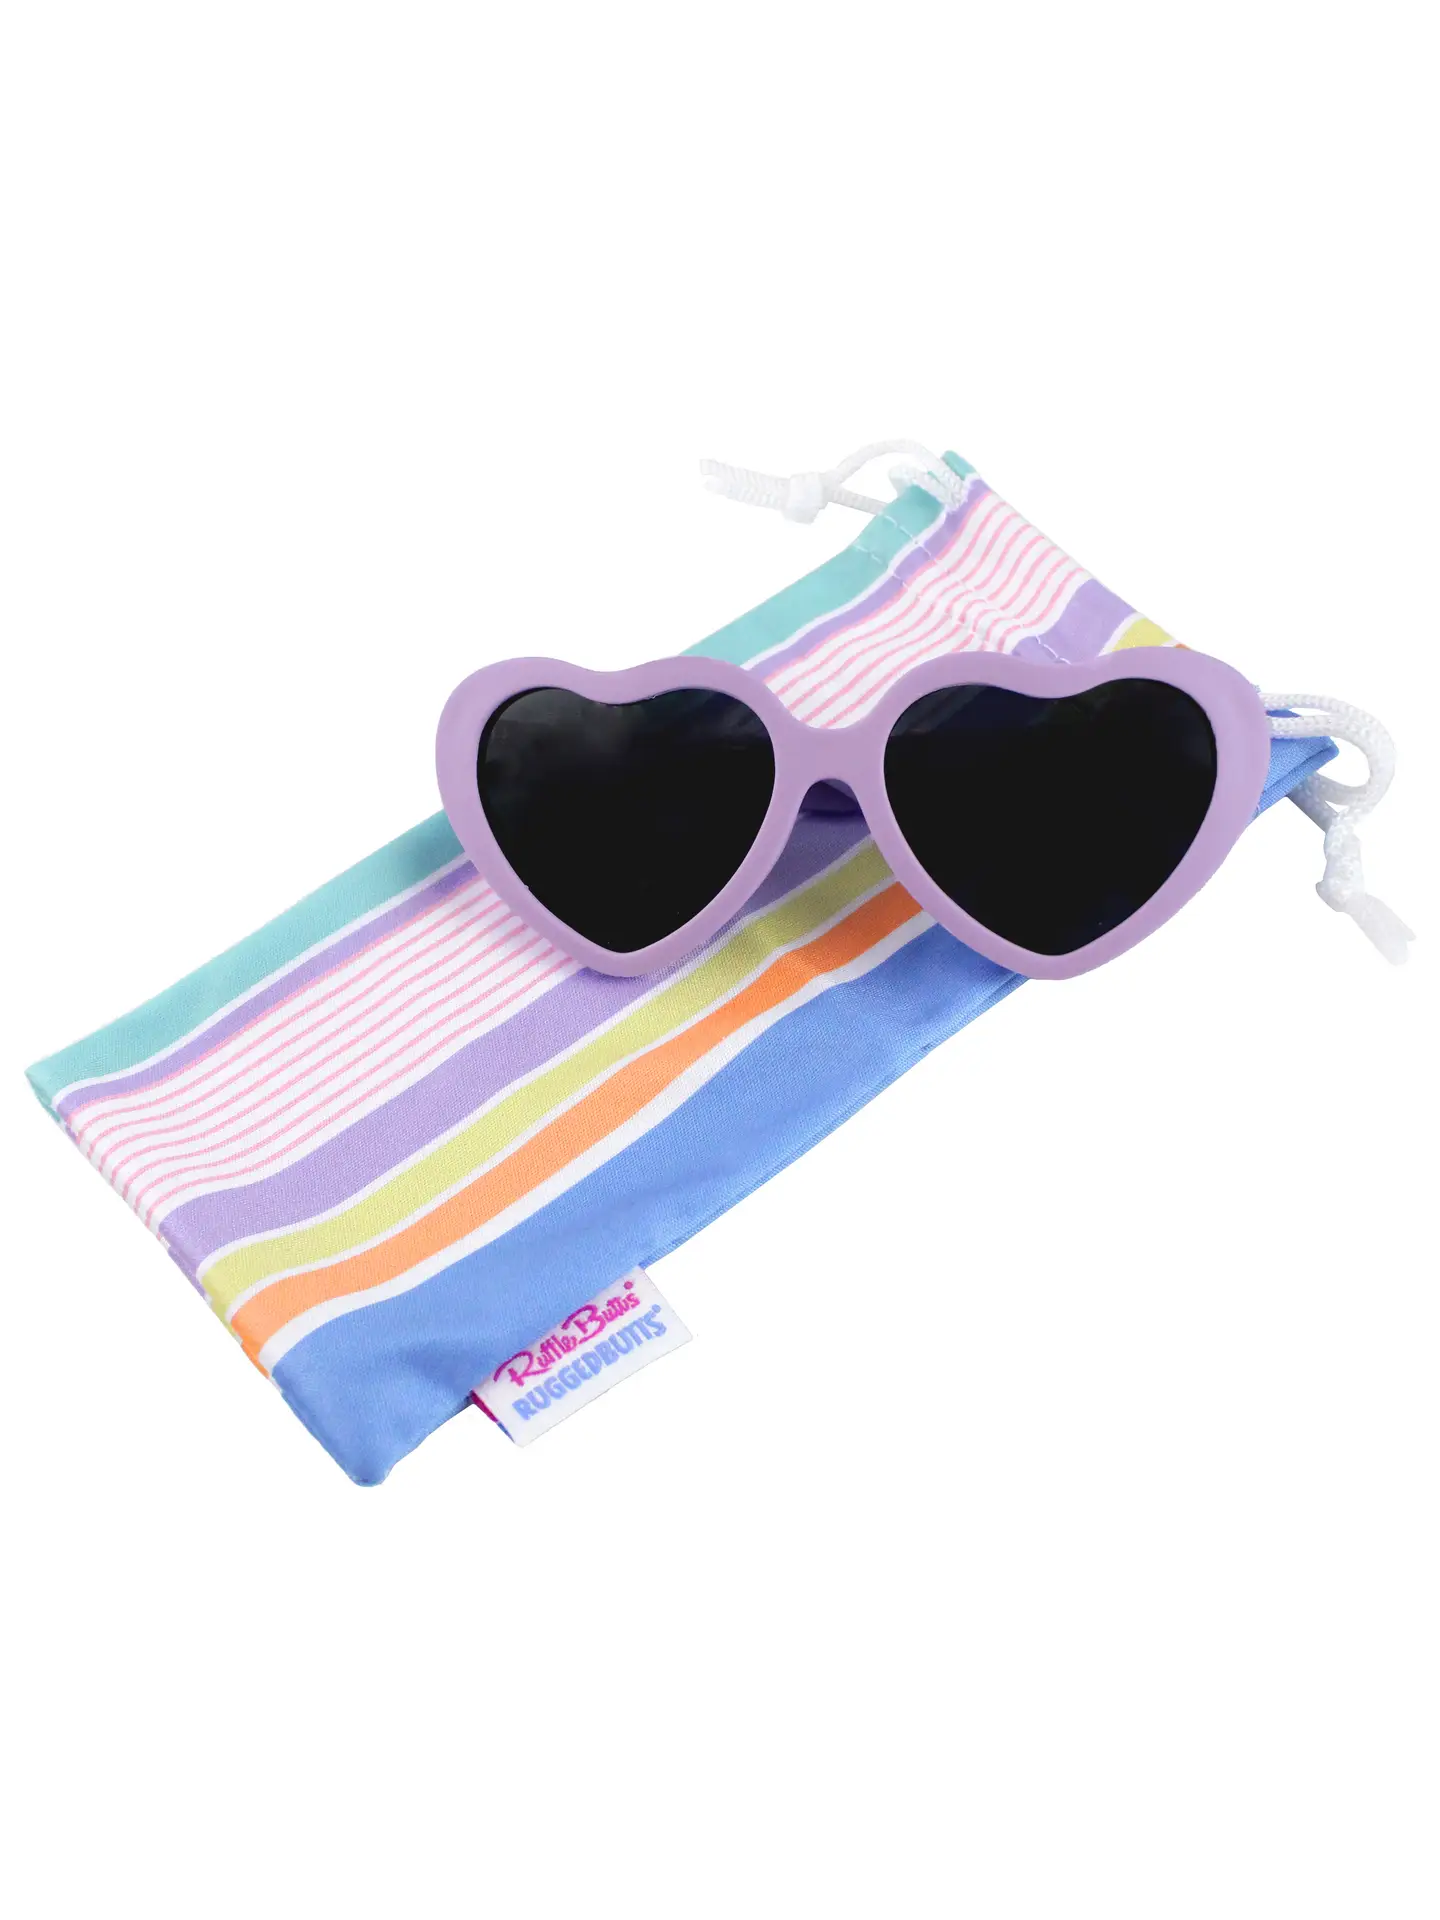 Lavender RuffleButts X Roshambo Heart Sunglasses